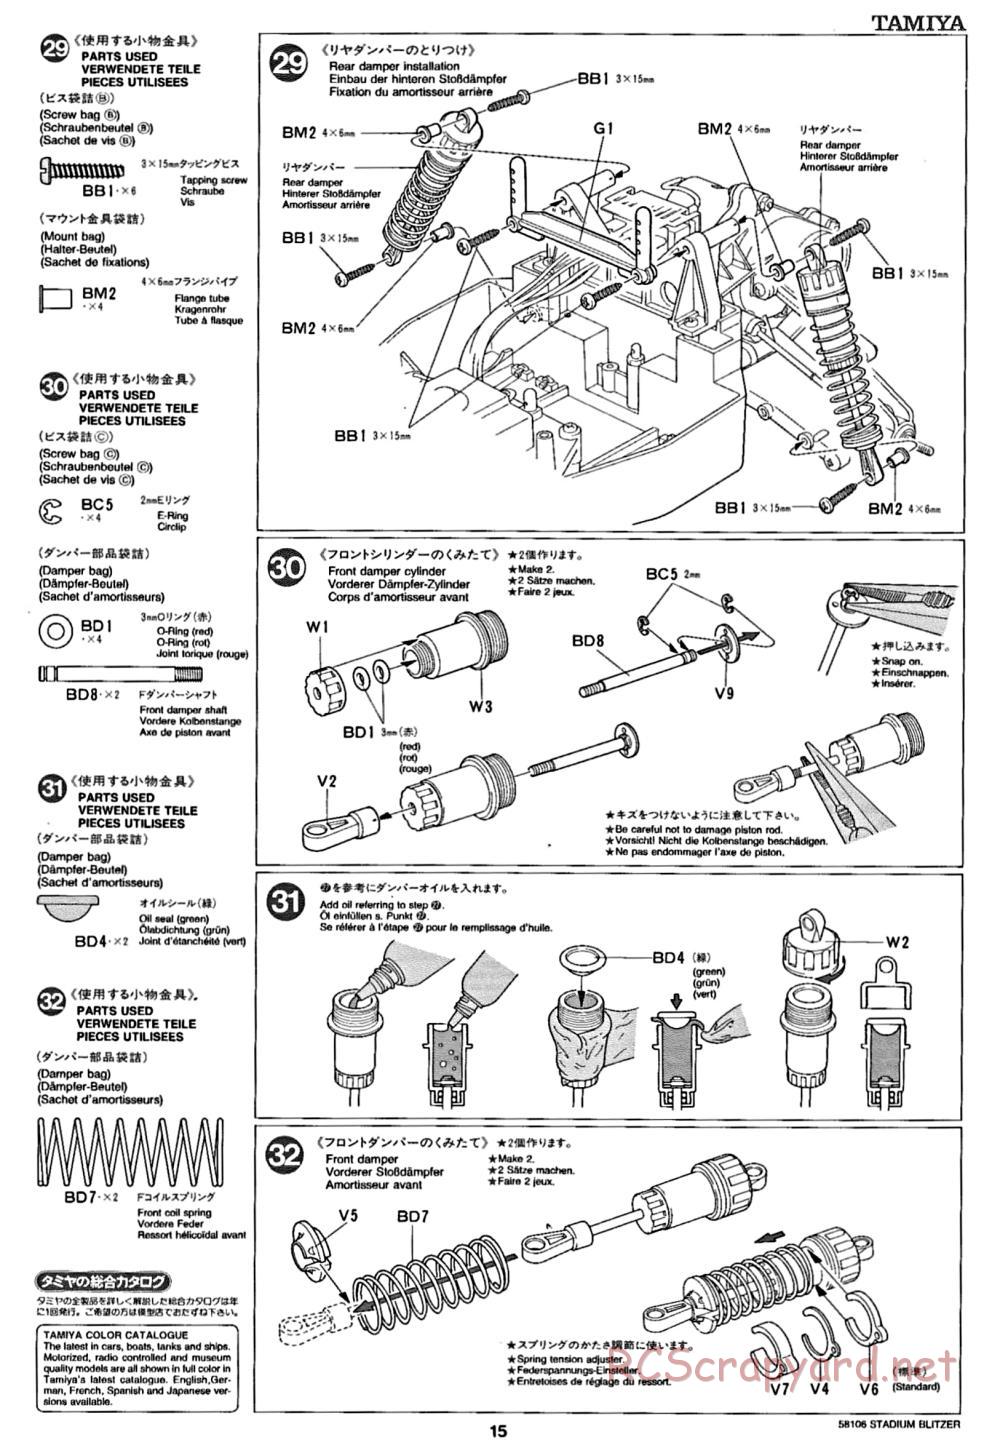 Tamiya - Stadium Blitzer Chassis - Manual - Page 15